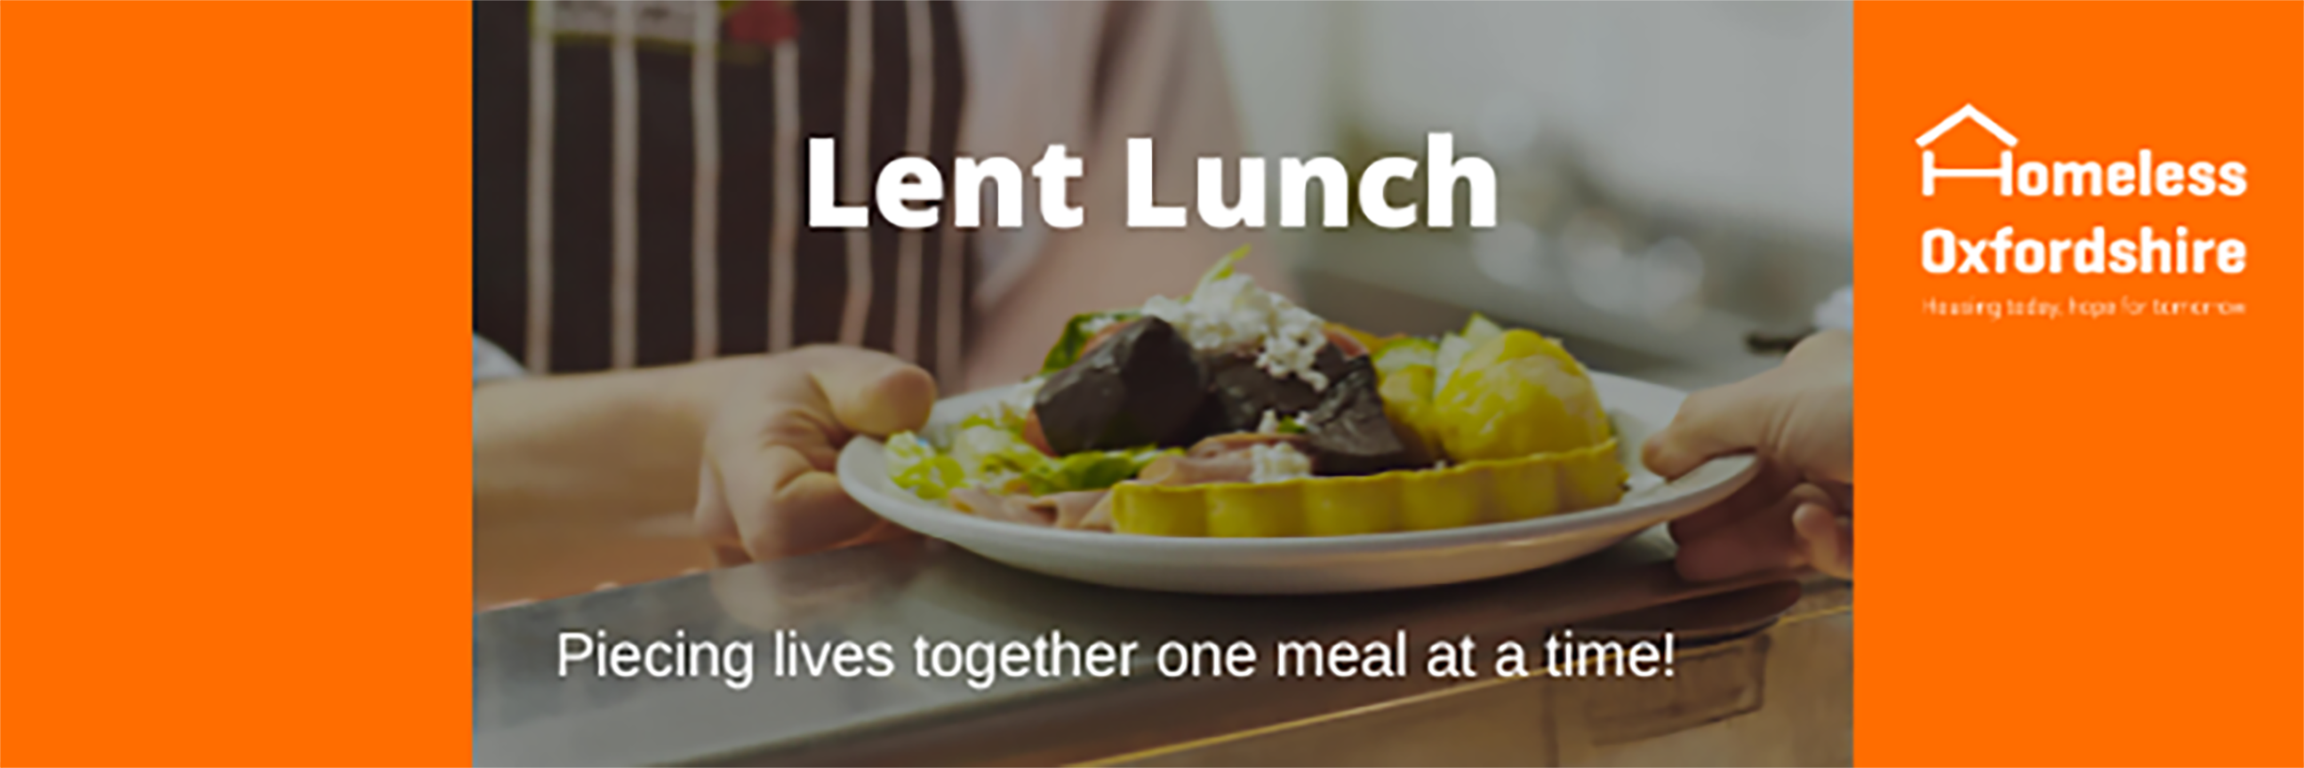 Lent-Lunch-Header X4